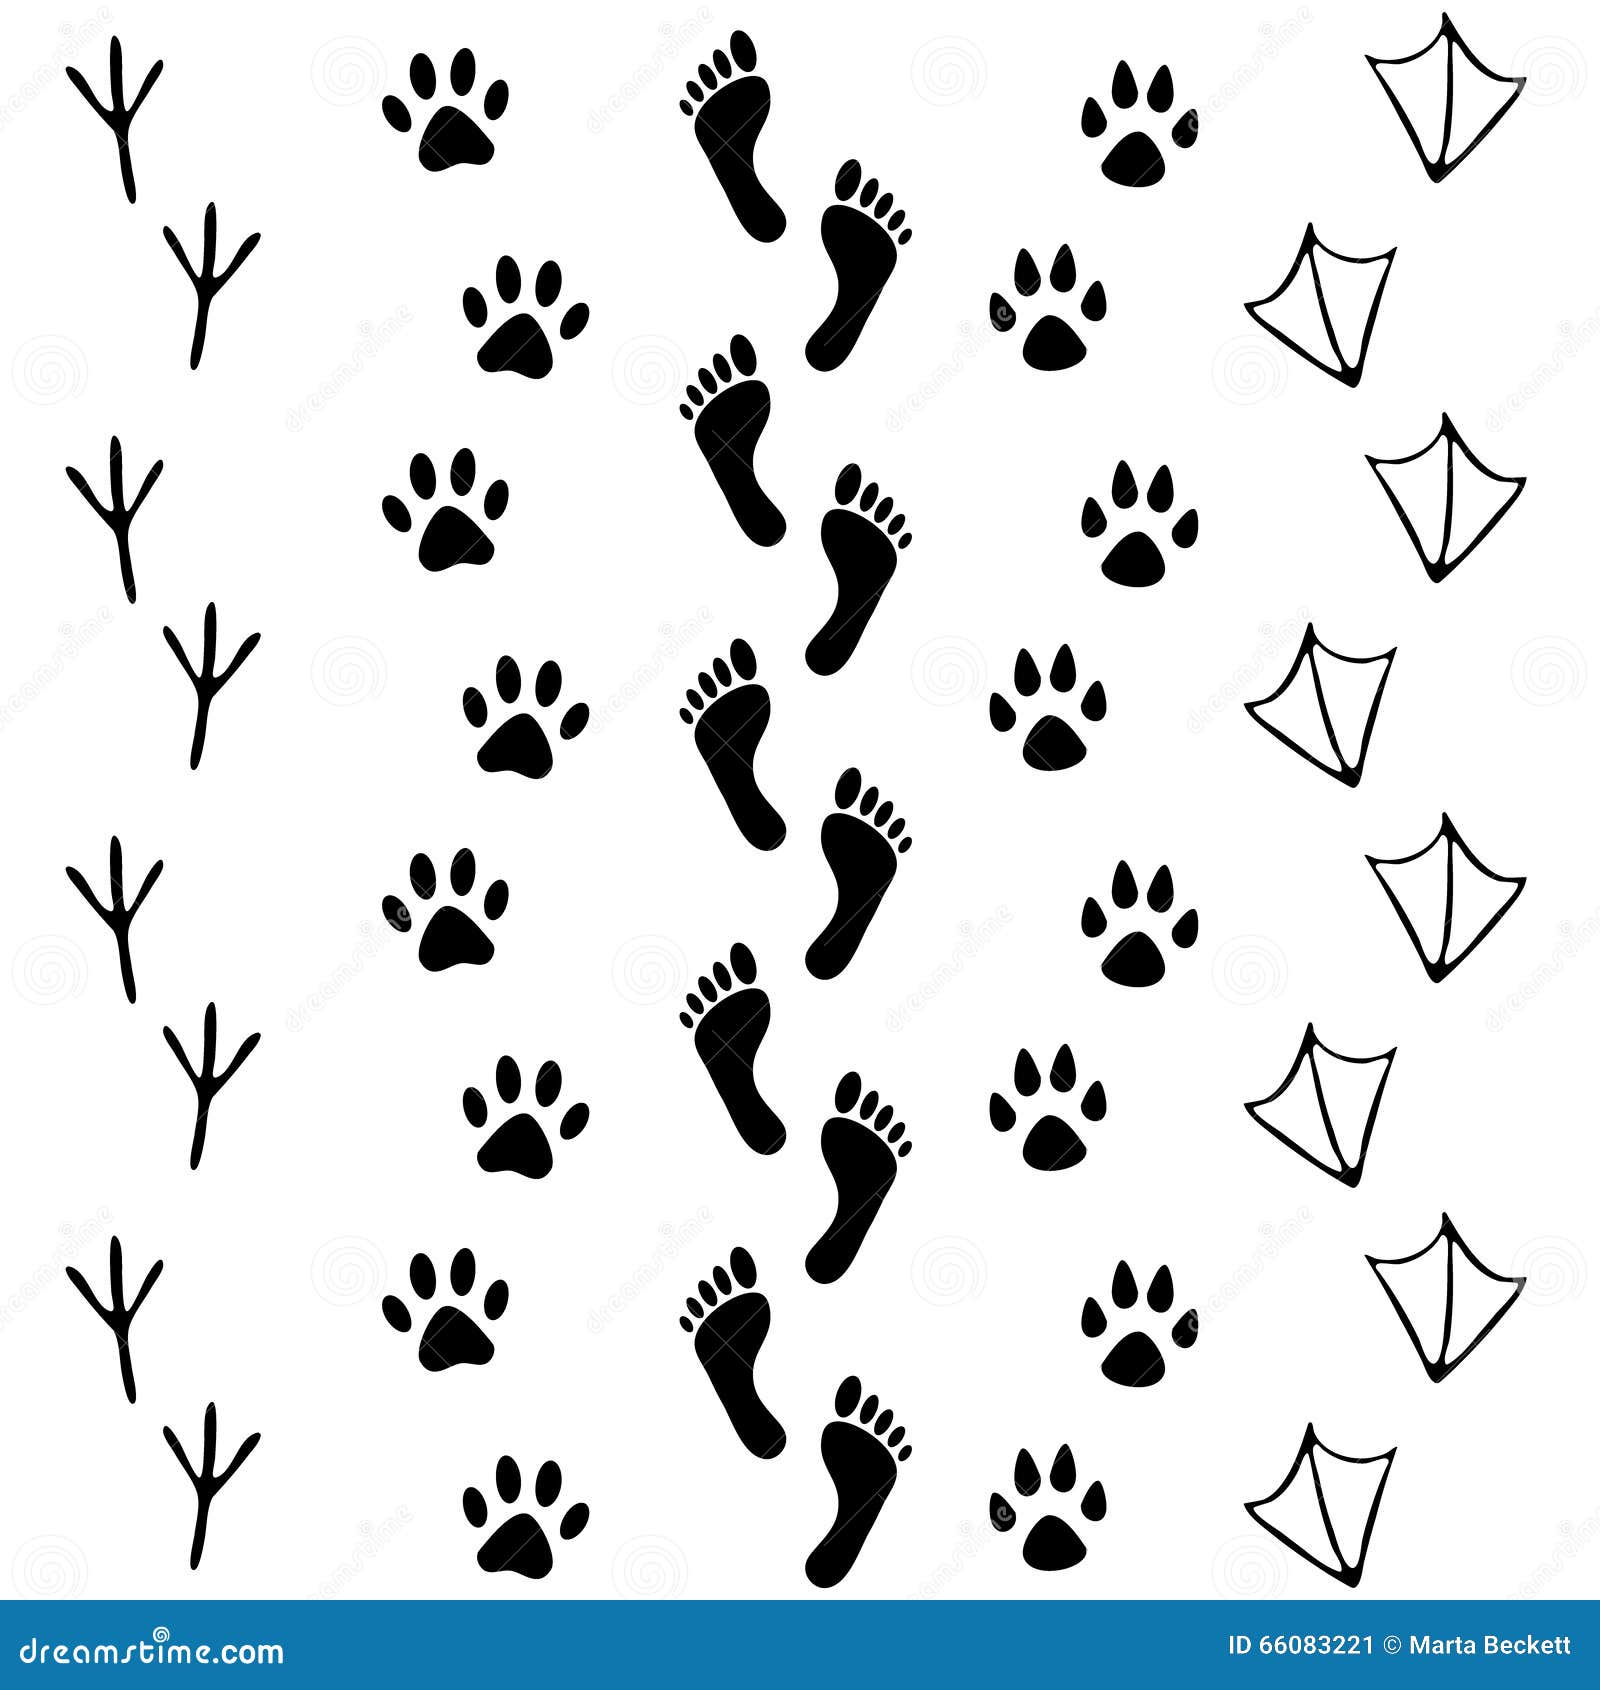  set of human and animal, bird footprints icon. collection of bare human foots, cat, dog, bird, chicken, hem, crow, duck foo